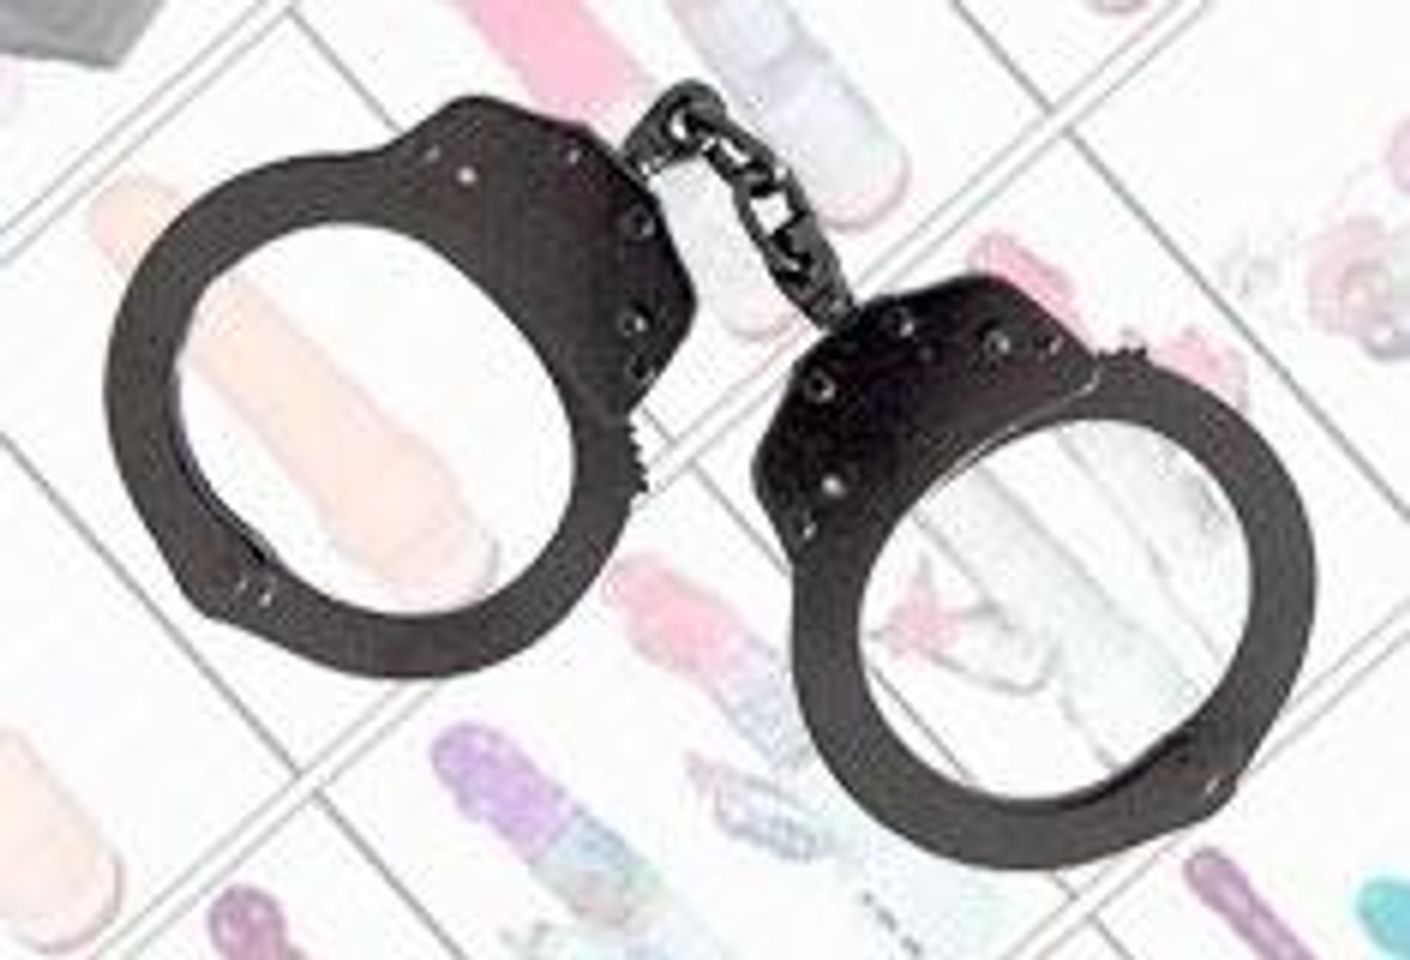 Lingerie Store Clerk Arrested for Selling 'Obscene Devices'